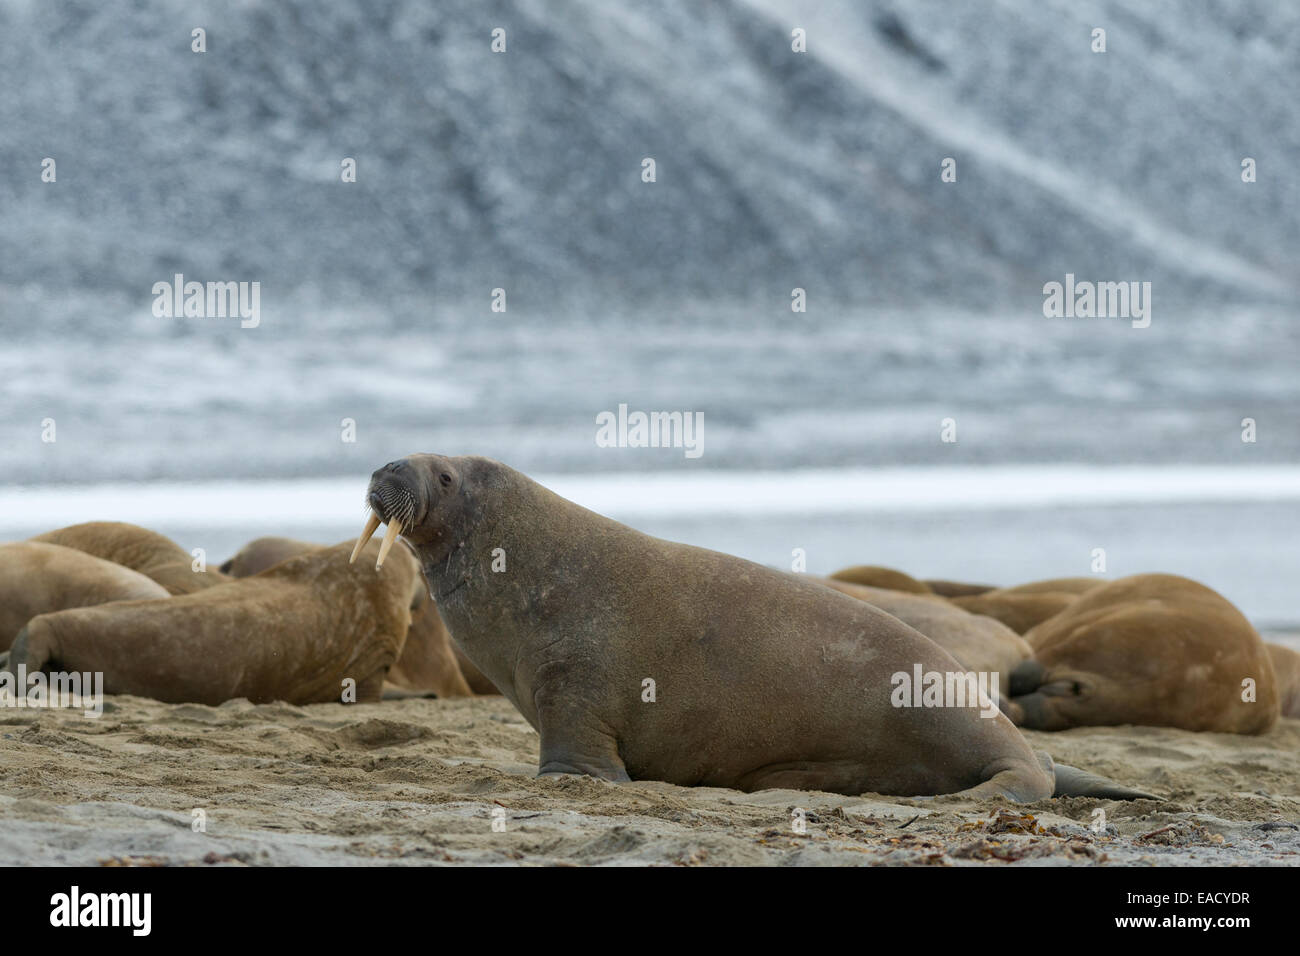 Walruses (Odobenus rosmarus), Phippsøya, Sjuøyane, Svalbard Archipelago, Svalbard and Jan Mayen, Norway Stock Photo